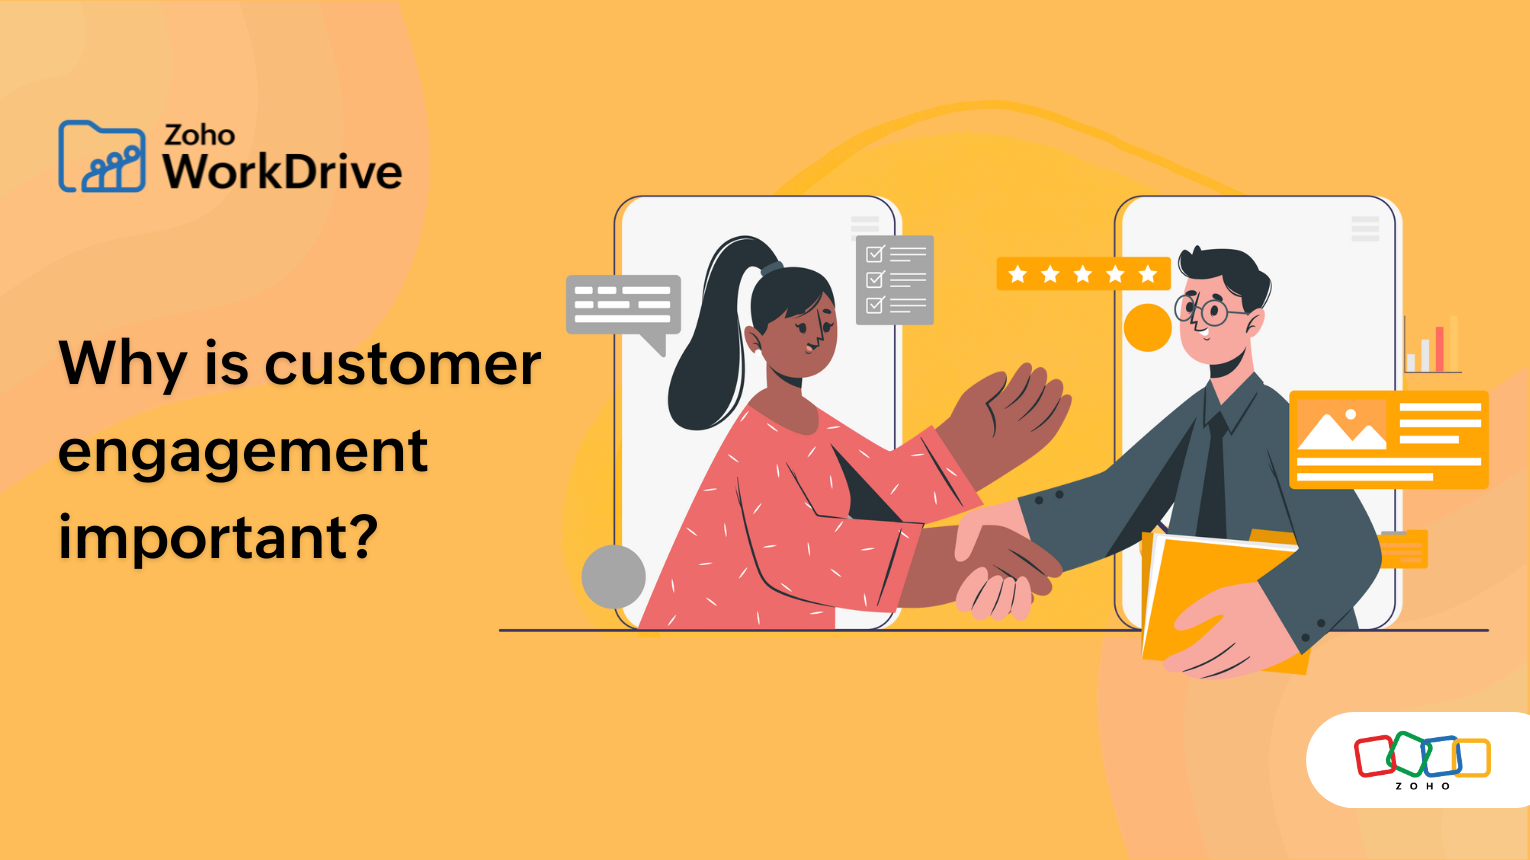 WorkDrive customer feedback